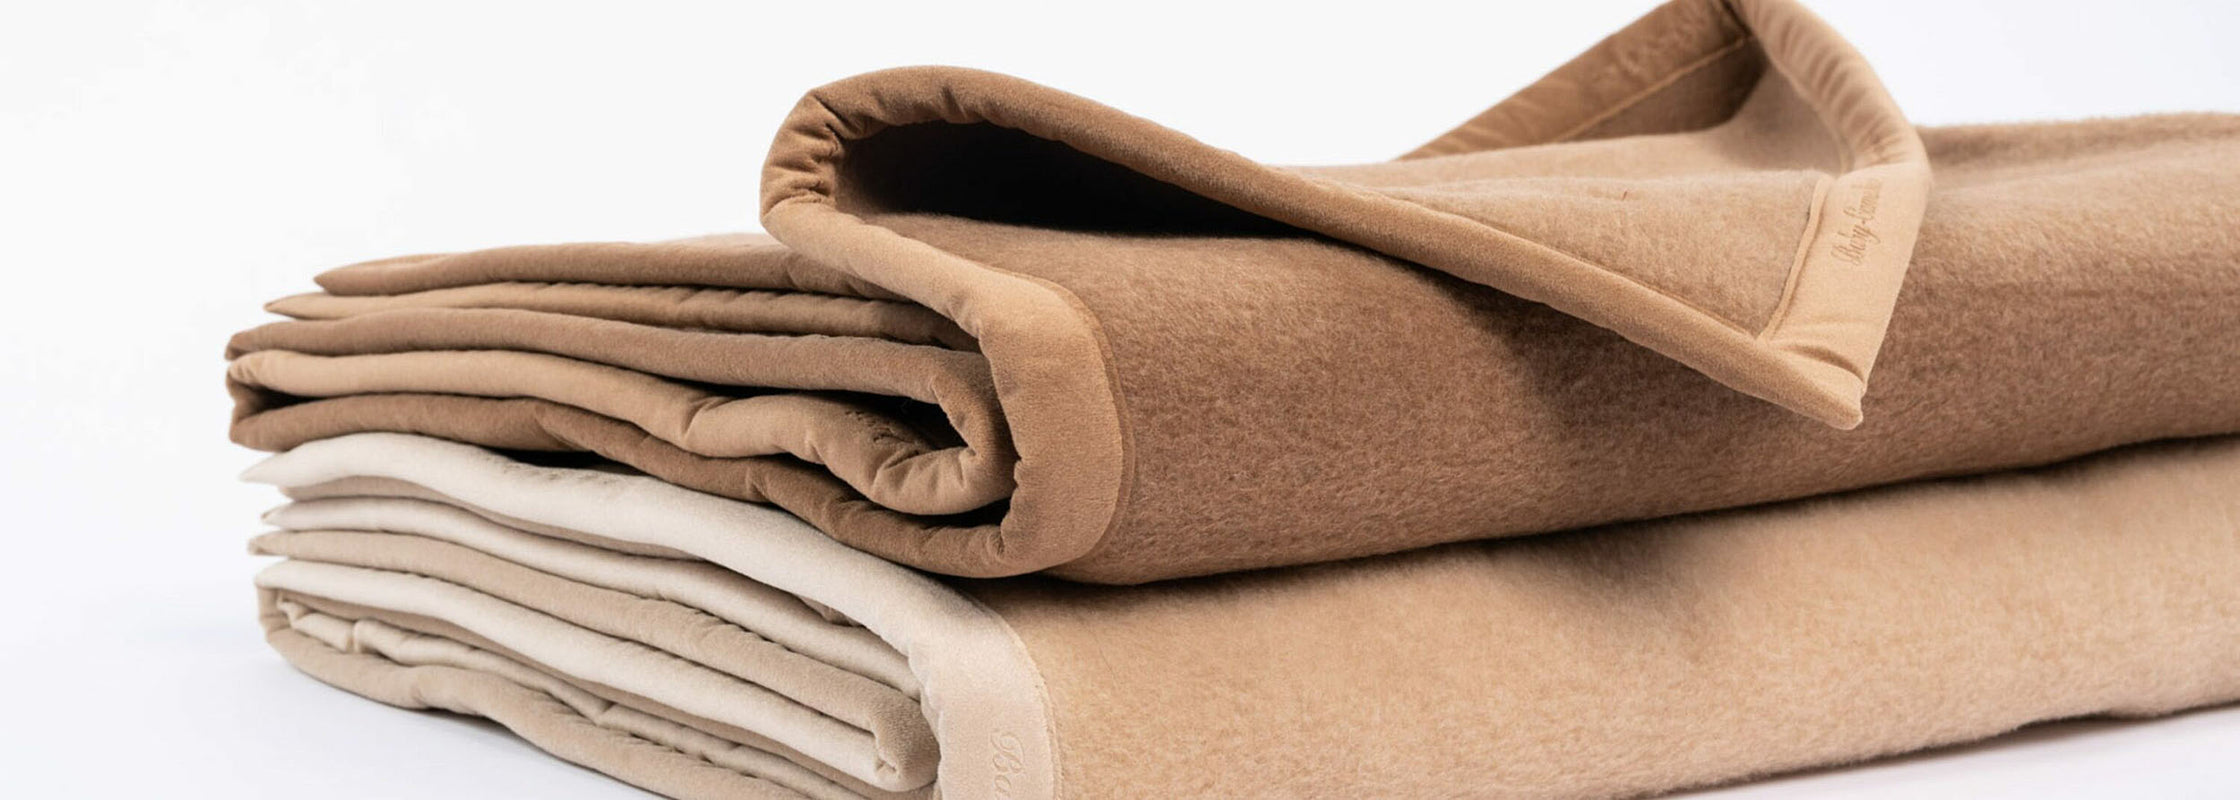 Ritter Decken – Hochwertige Wolldecken Naturhaardecken 